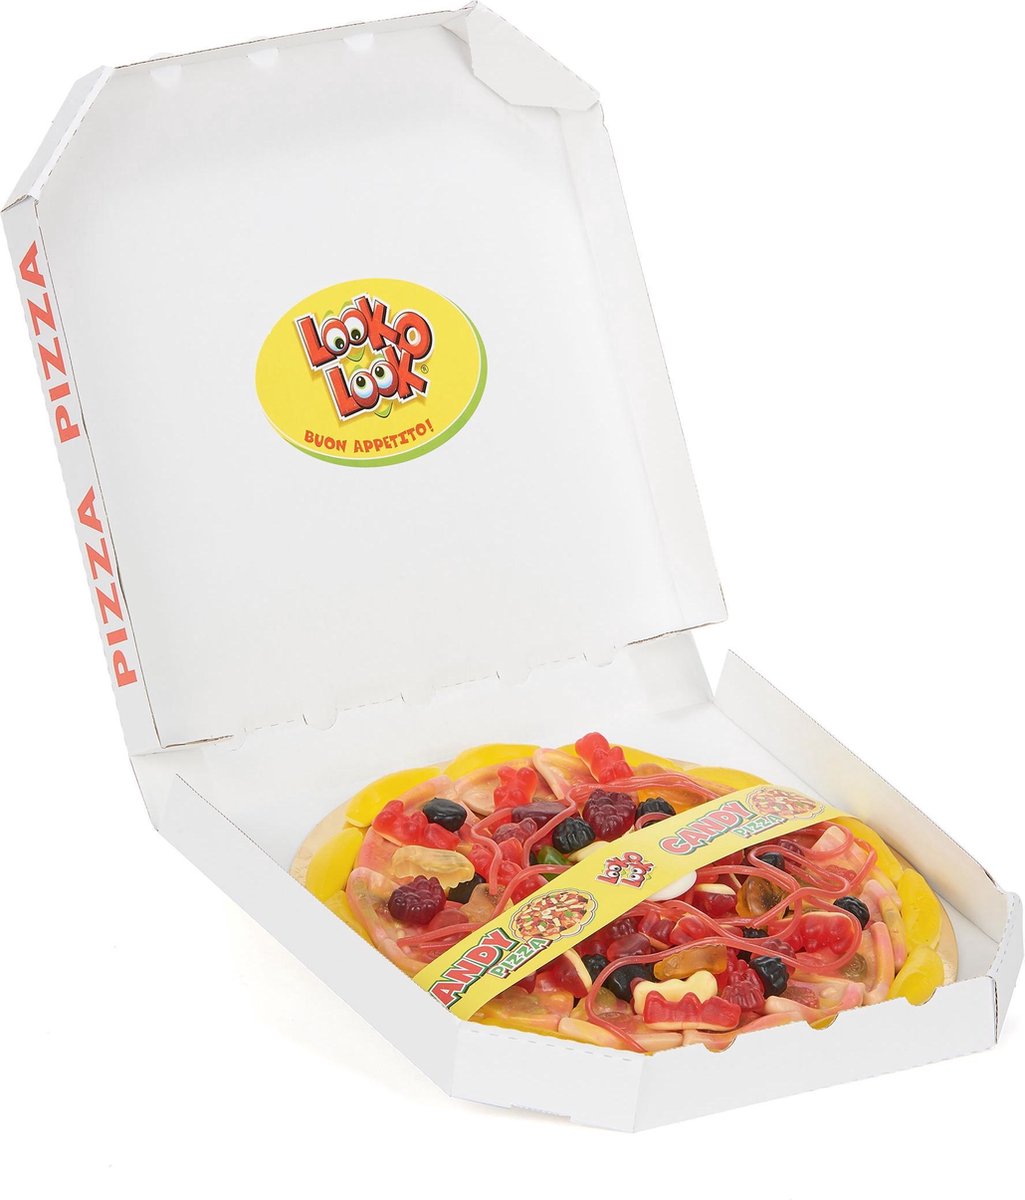 Look-O-Look Snoep Pizza - 435 Gram | bol.com